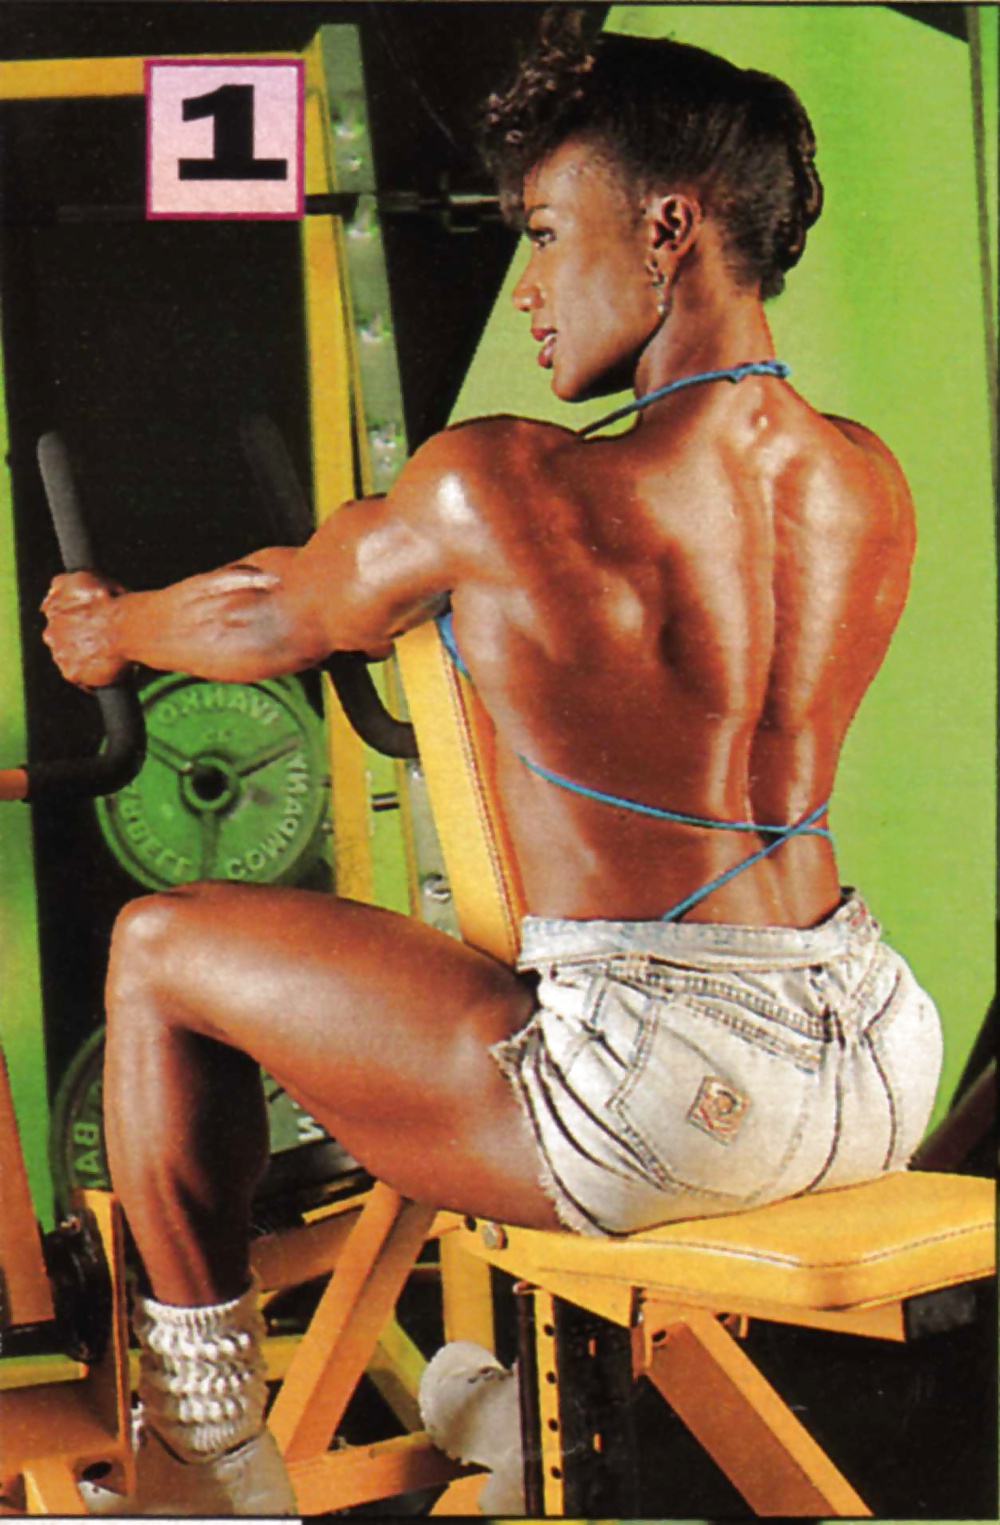 Lenda murray: ms olympia, sexy amazing muscle fbb - ameman
 #25225293